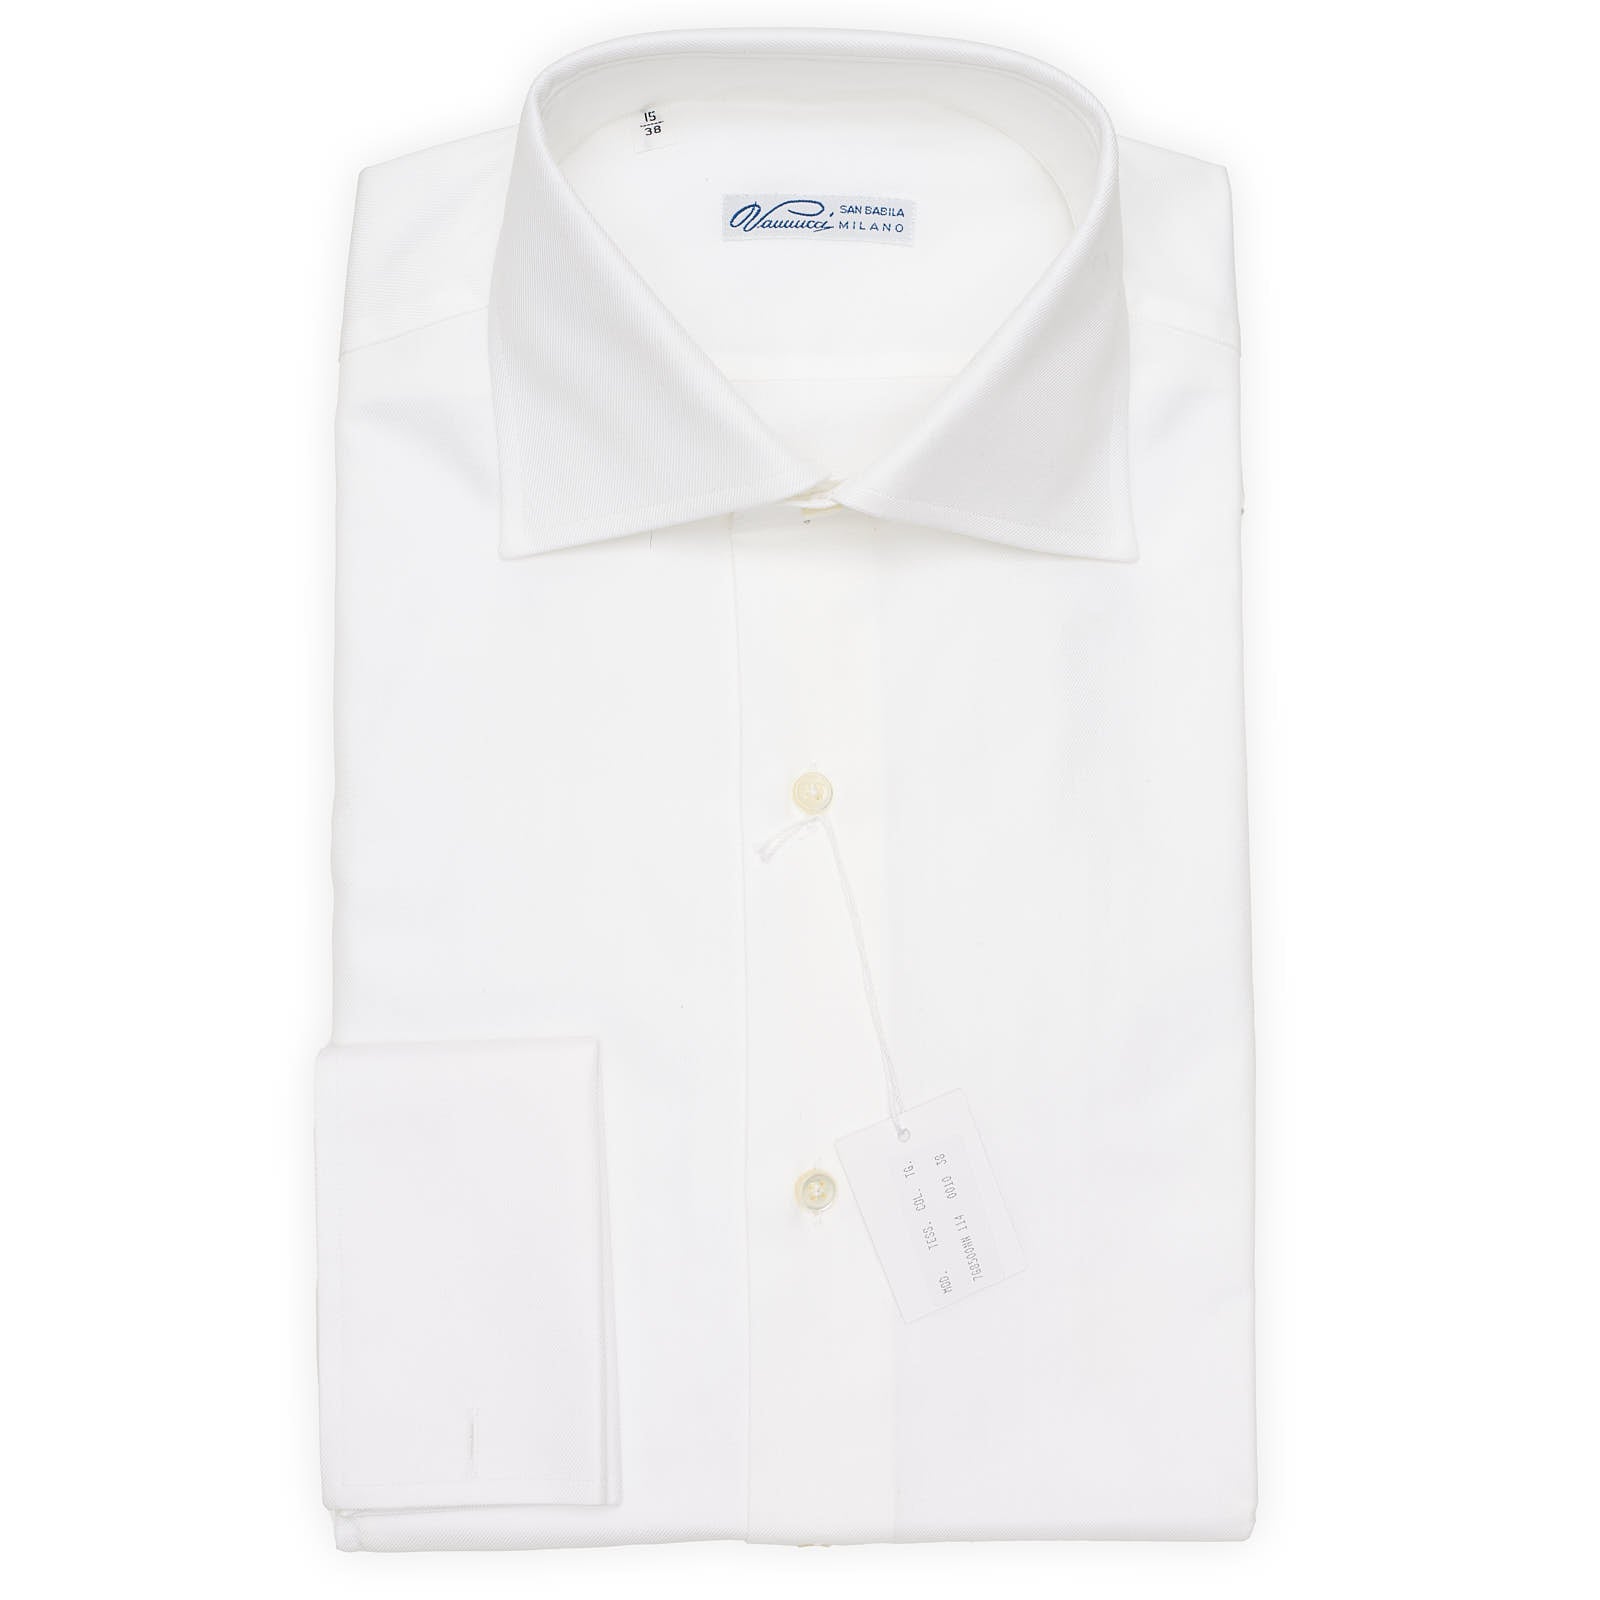 VANNUCCI Milano White Twill Cotton French Cuff Dress Shirt EU 38 NEW US 15